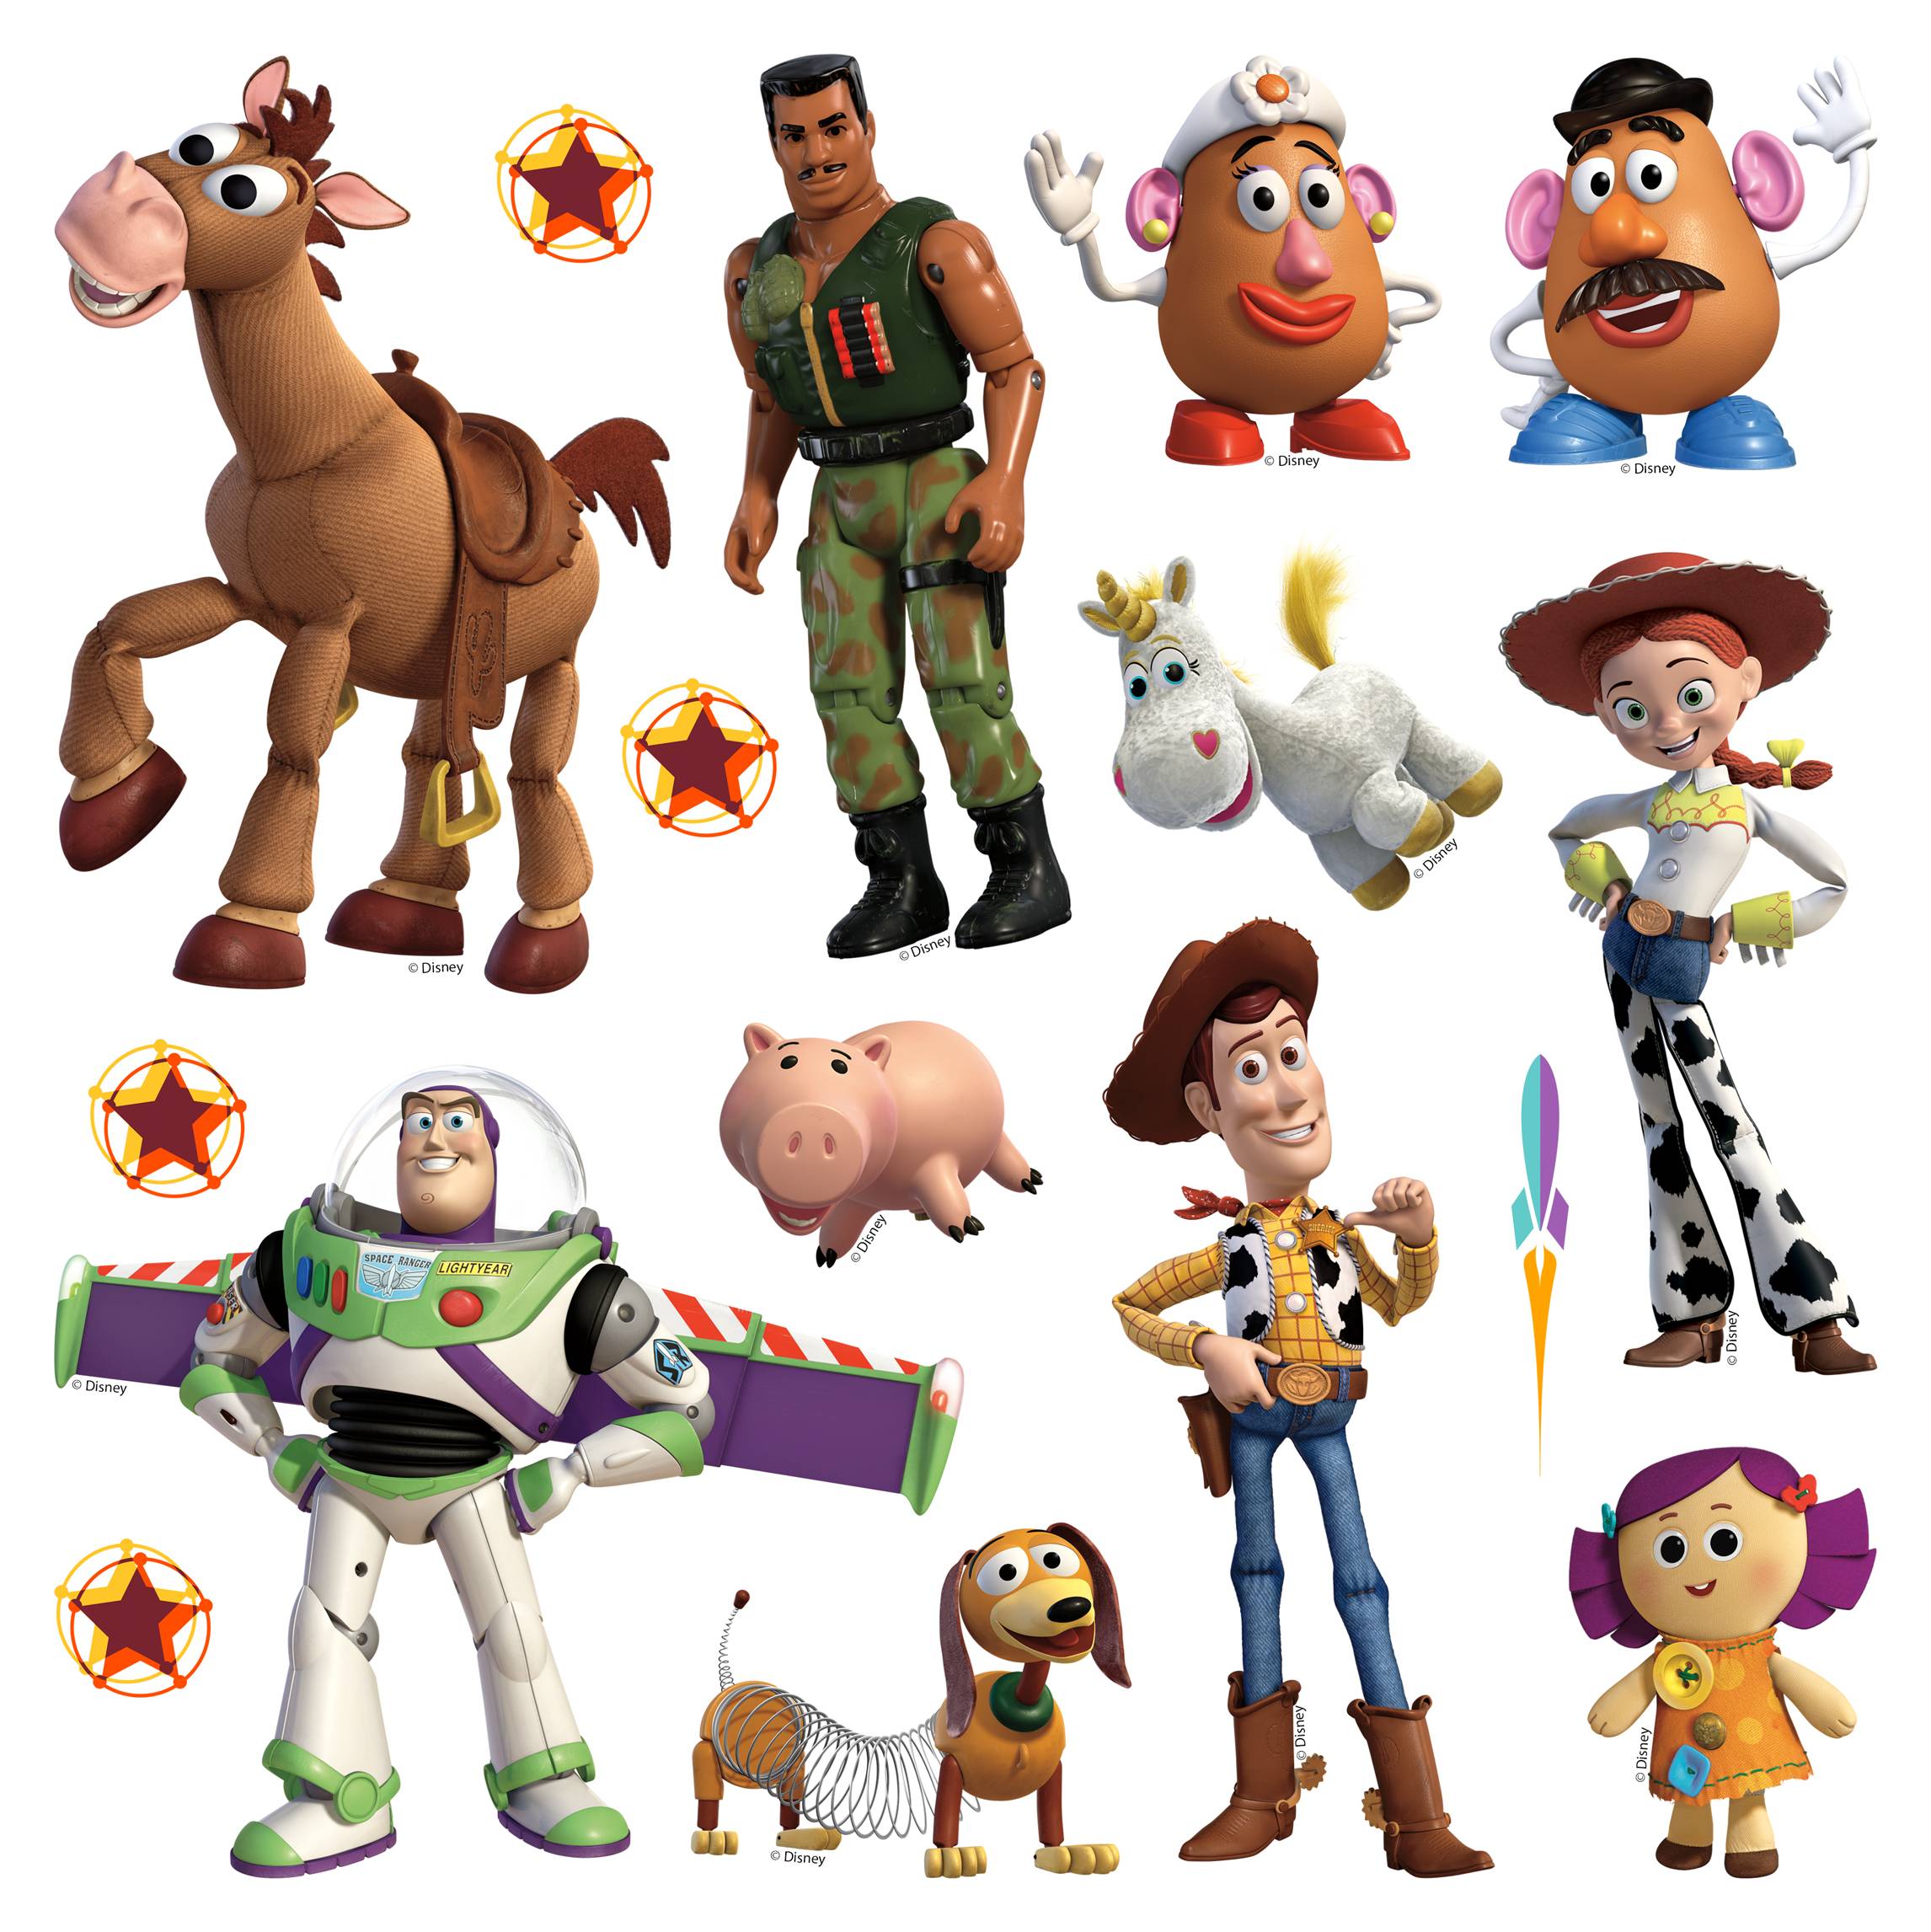 Wandtattoo Toy Story kaufen | home24